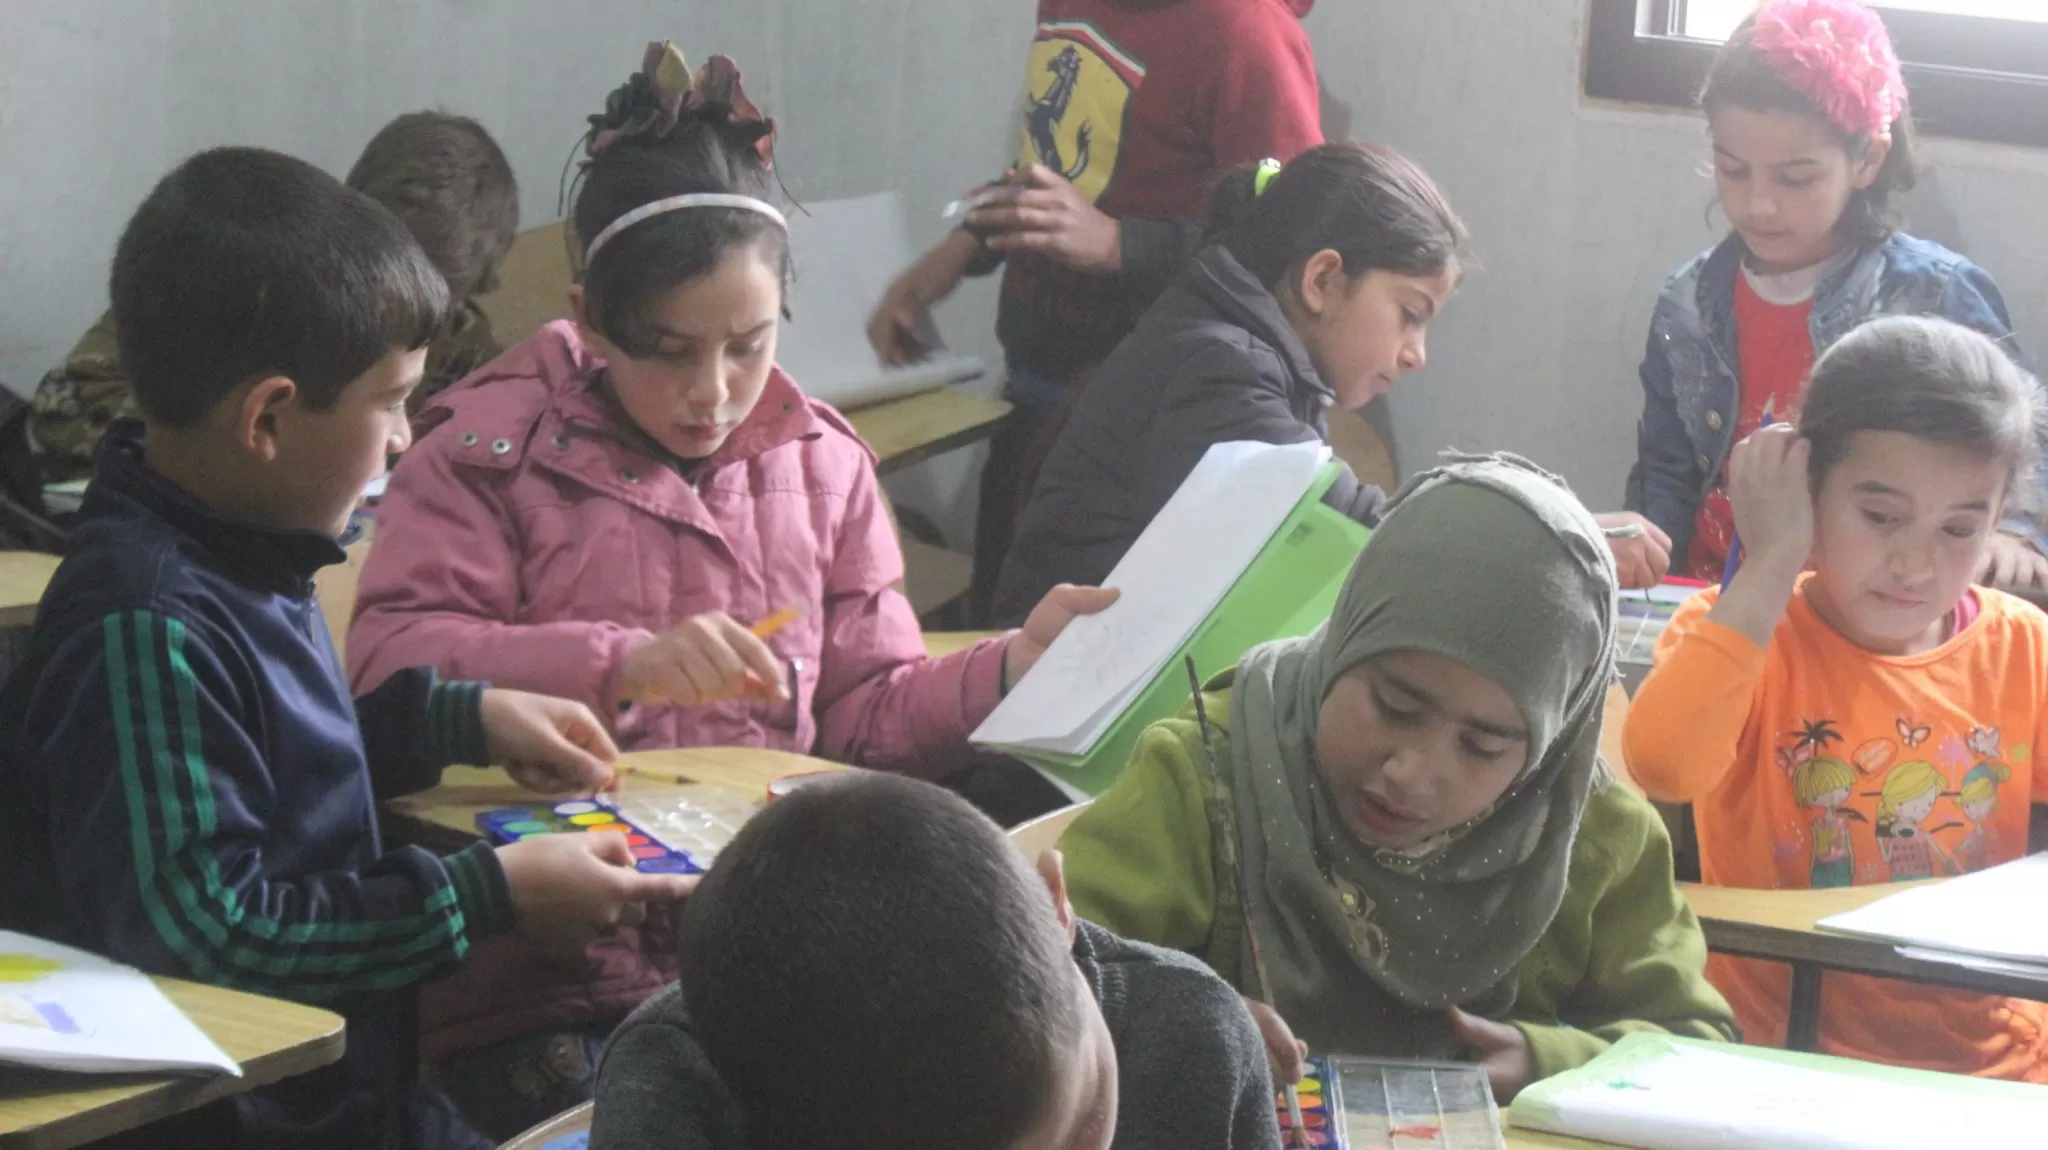 War zone charity school re-opens in Lebanon after ISIL retreat